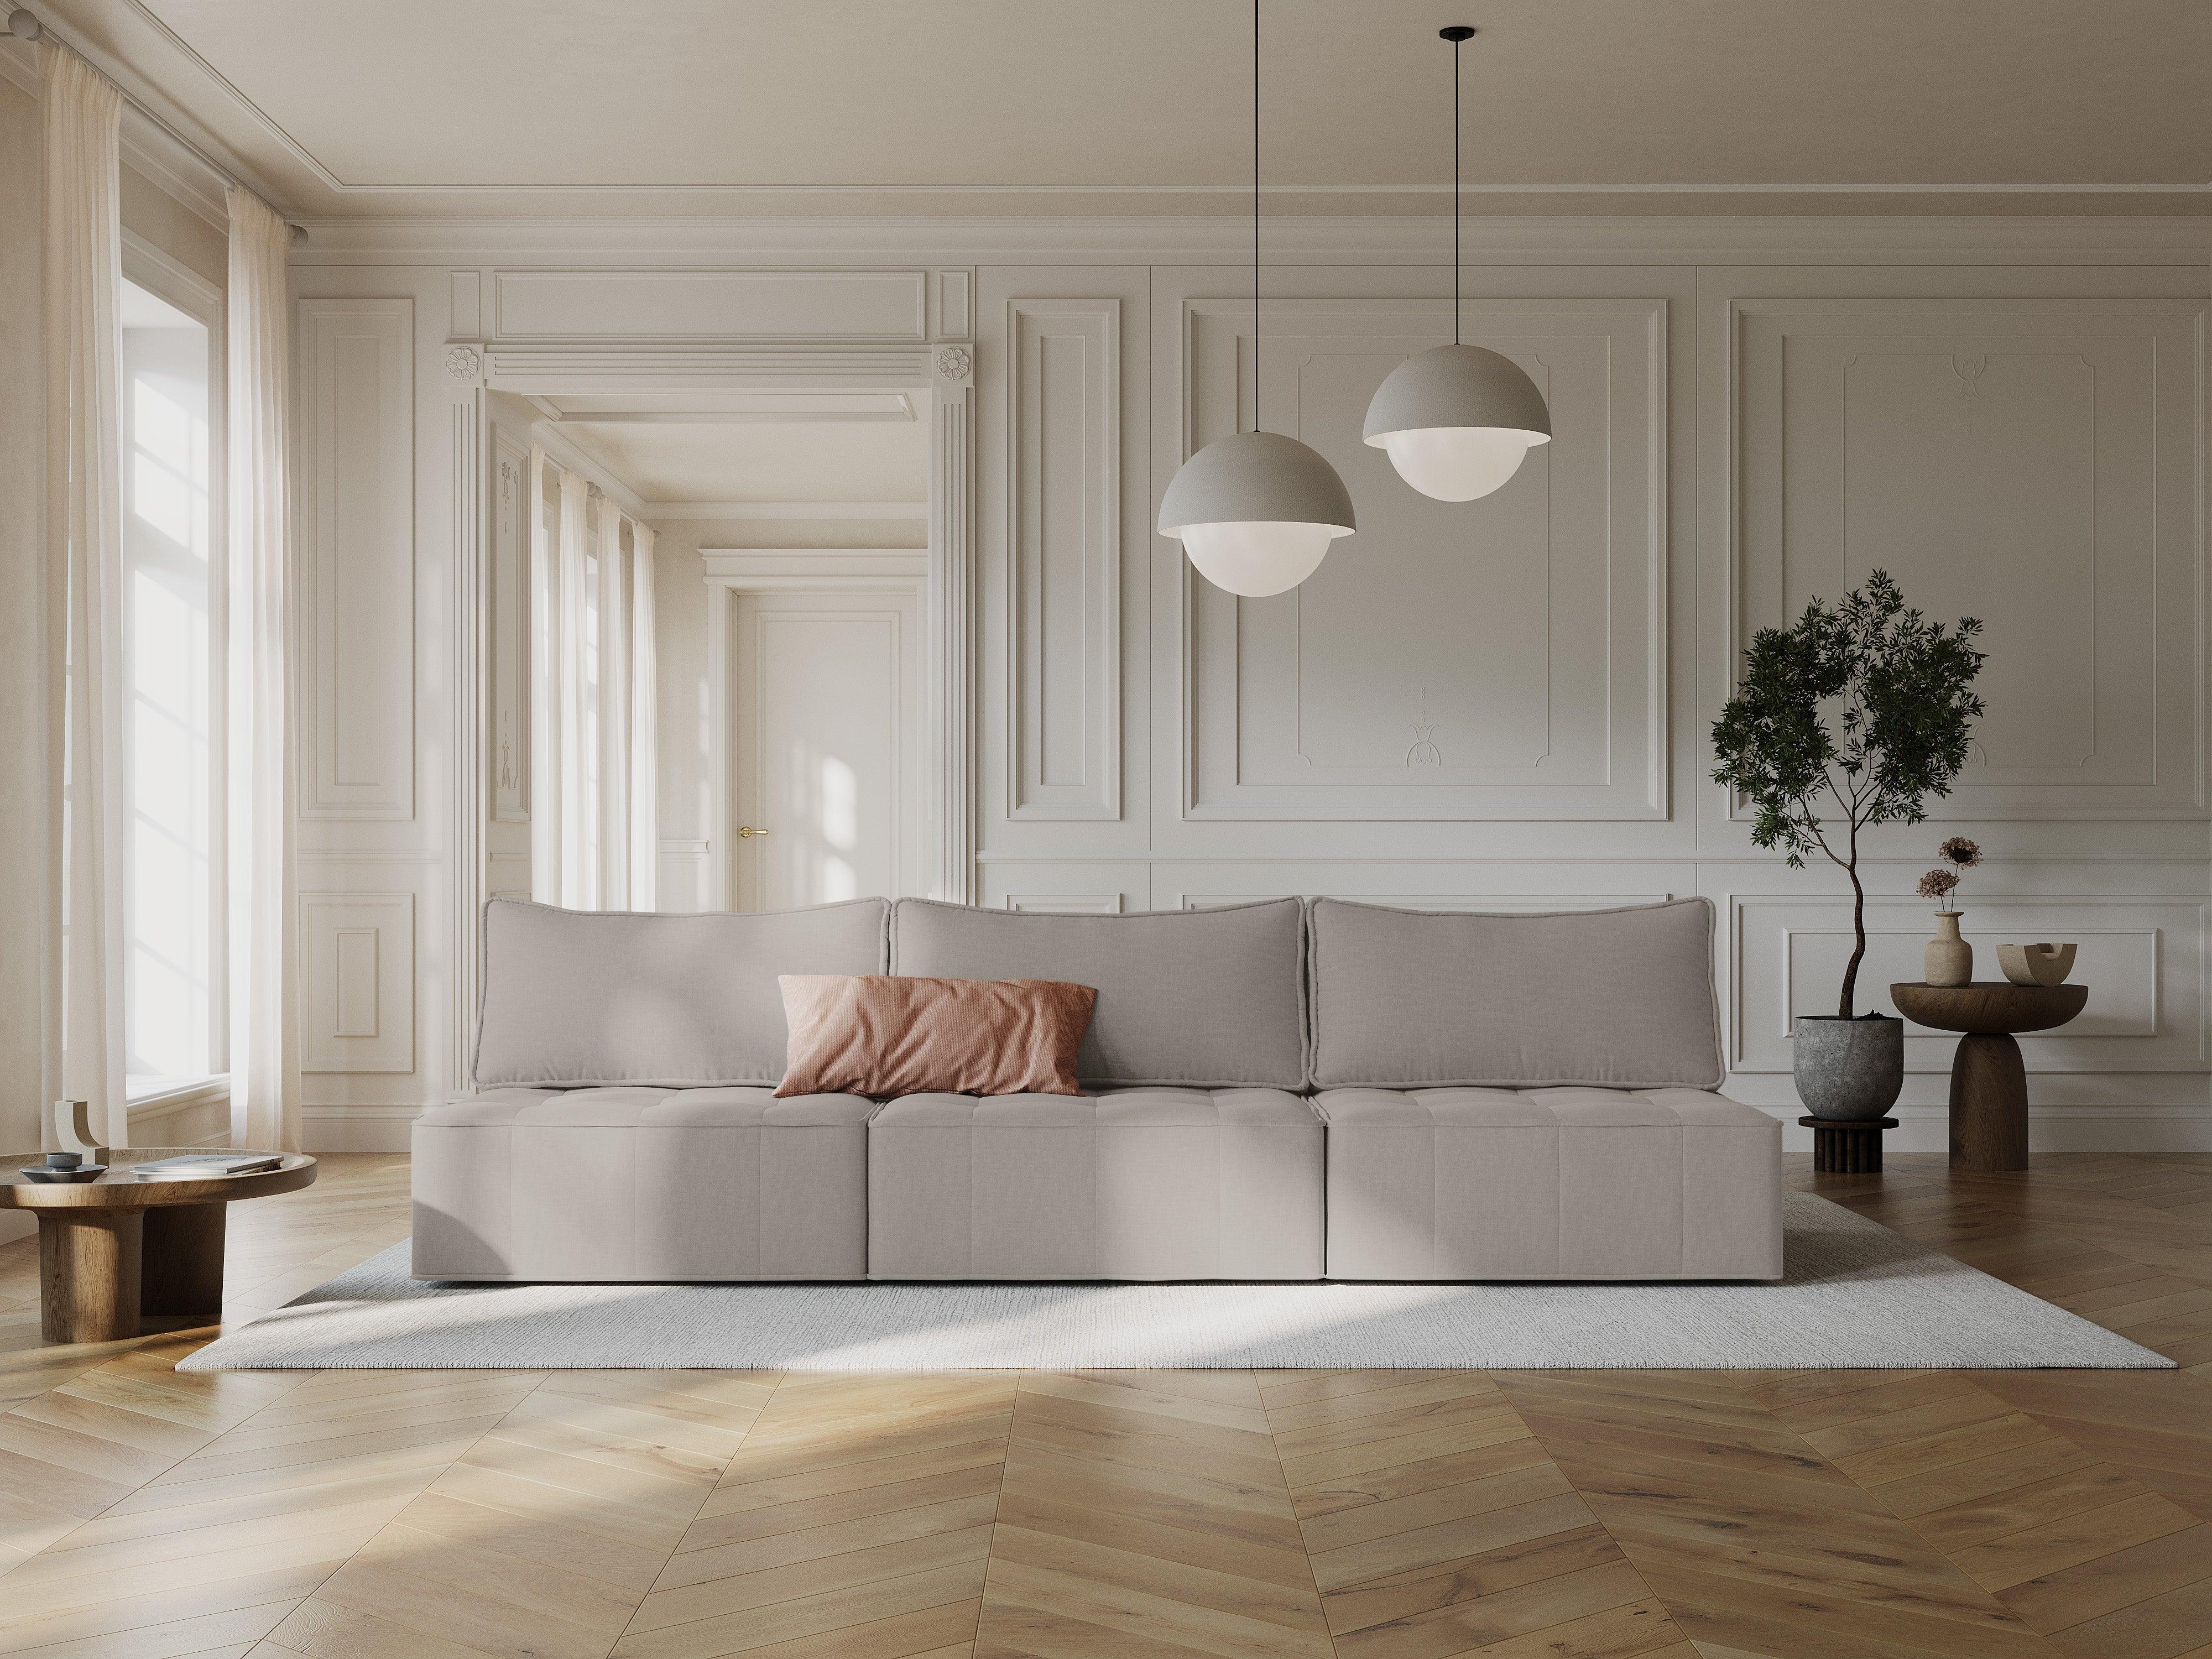 Sofa otwarta 5-osobowa VERLET beżowy Interieurs 86    Eye on Design